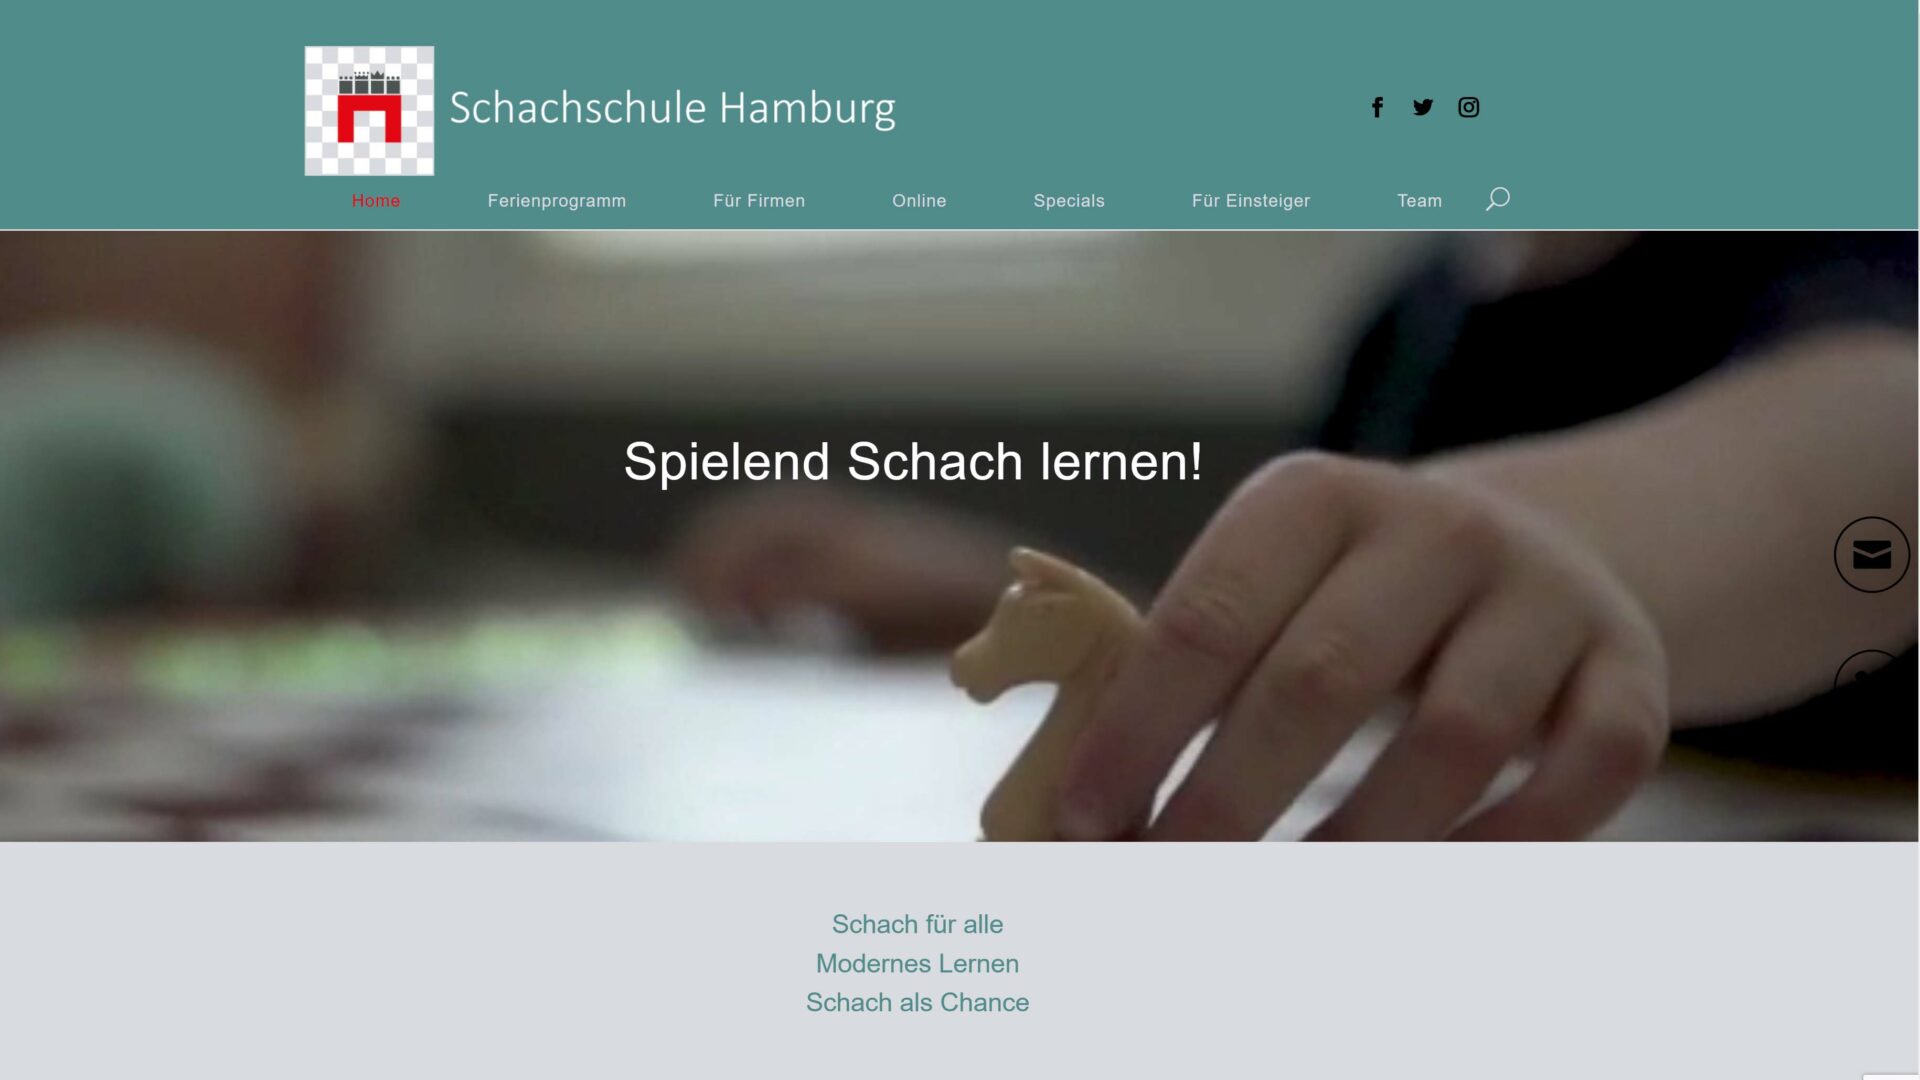 Schachschule Hamburg<br />
Website